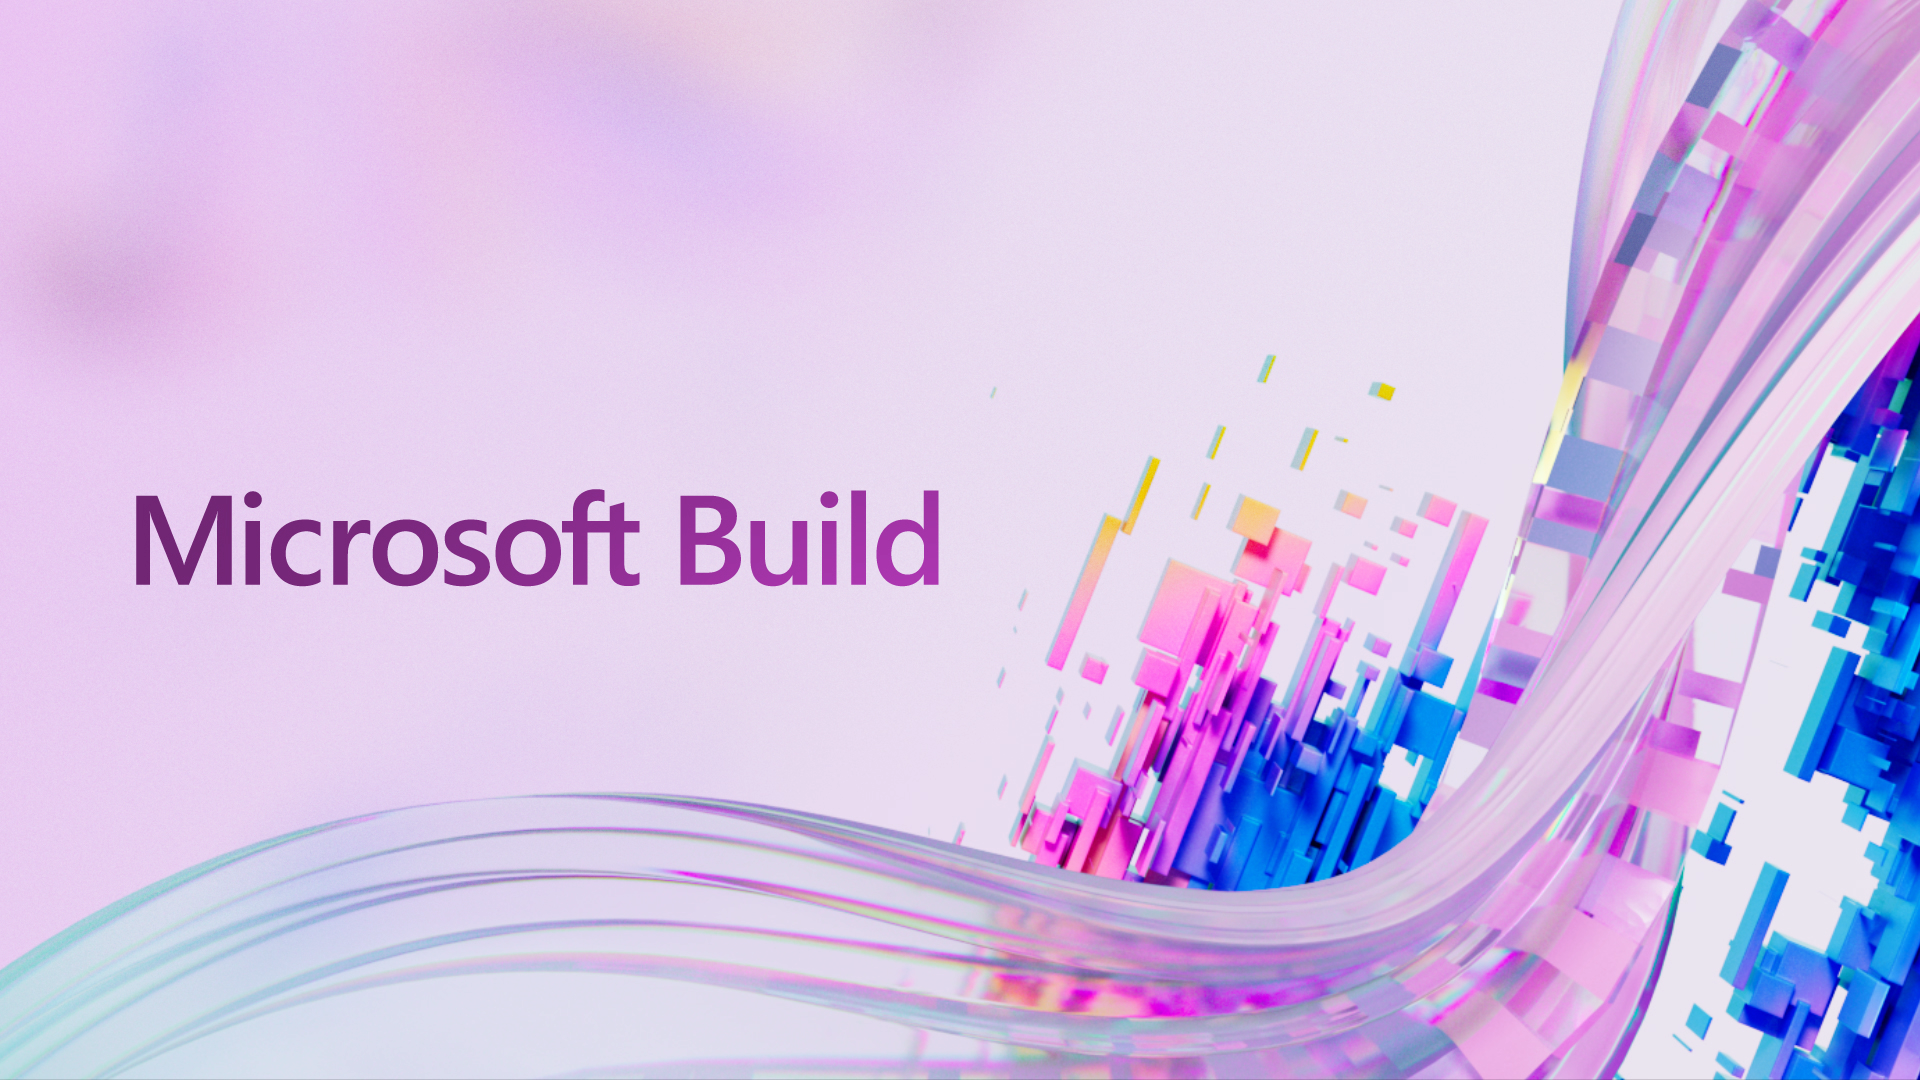 Microsoft Build 2022 logo with purple theme and blocky wave logo